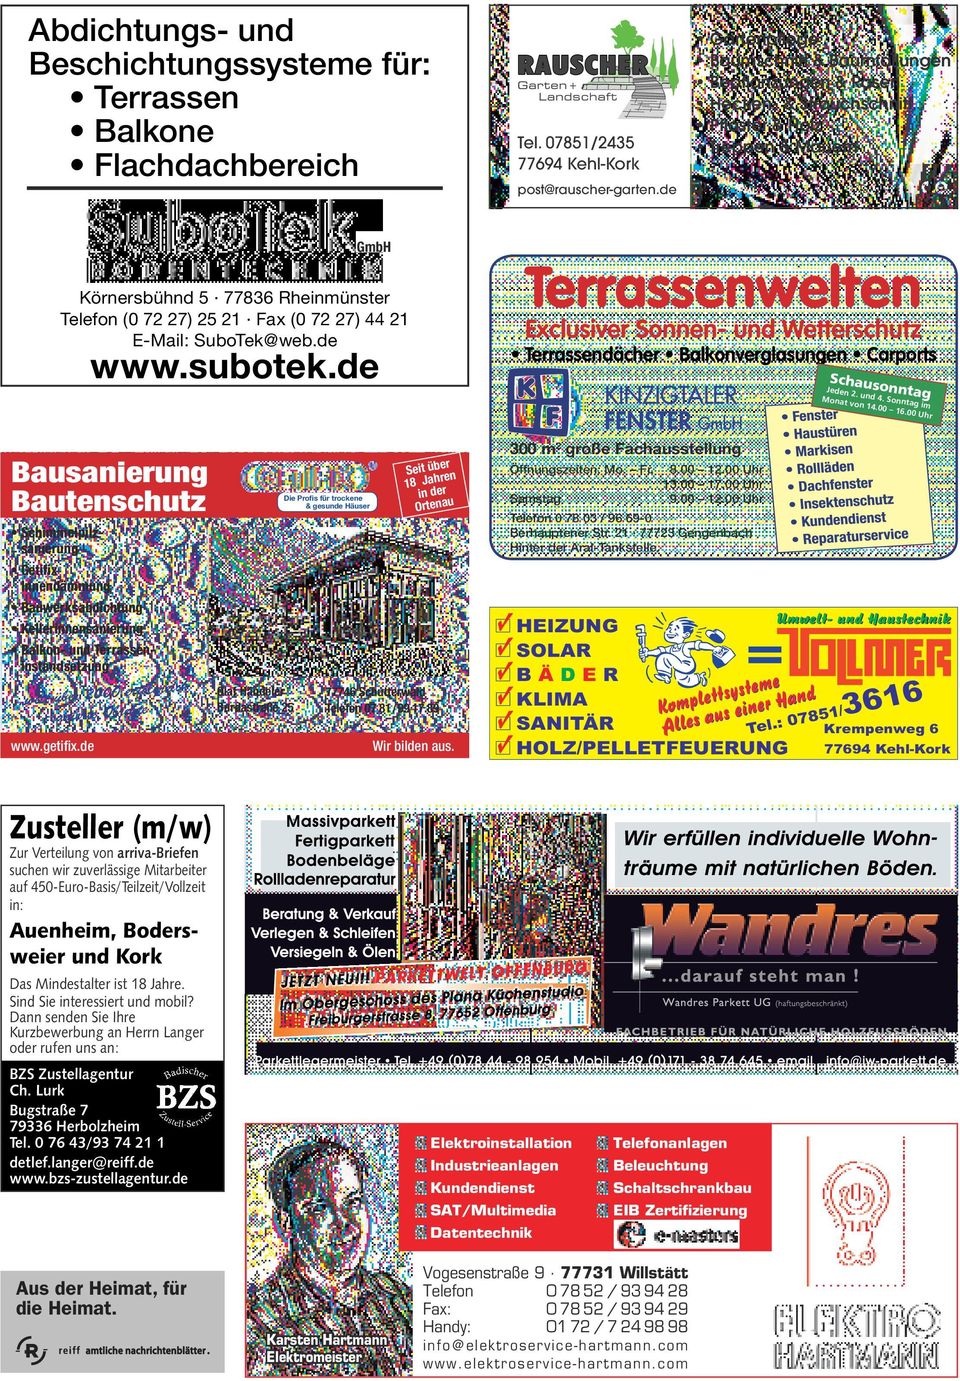 de GmbH Körnersbühnd 5 77836 Rheinmünster Telefon (0 72 27) 2521 Fax (0 72 27) 4421 E-Mail: SuboTek@web.de www.subotek.